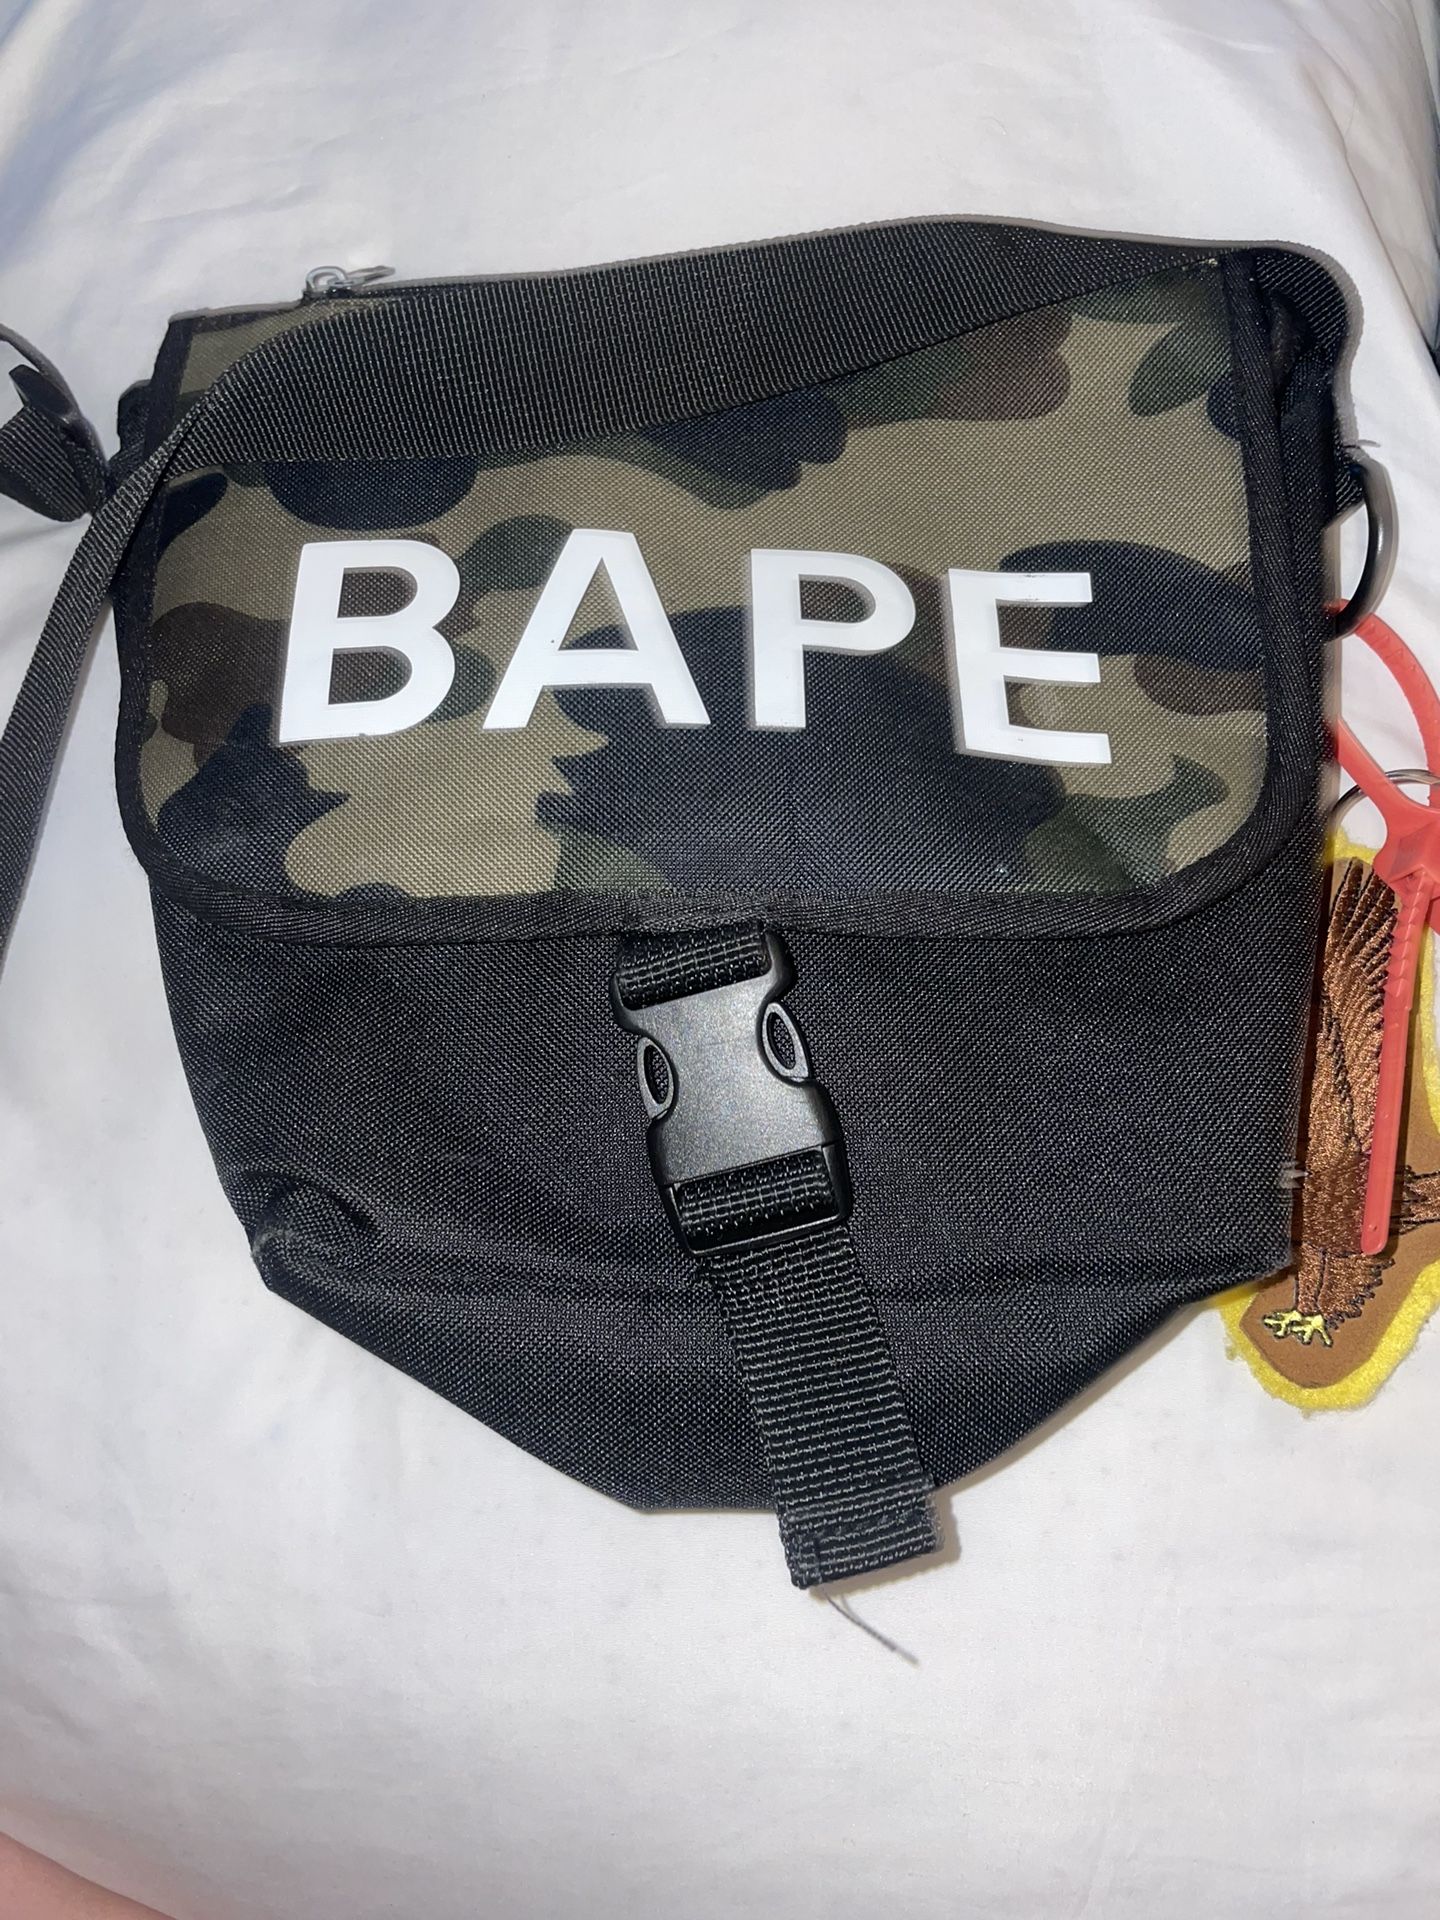 bape bag